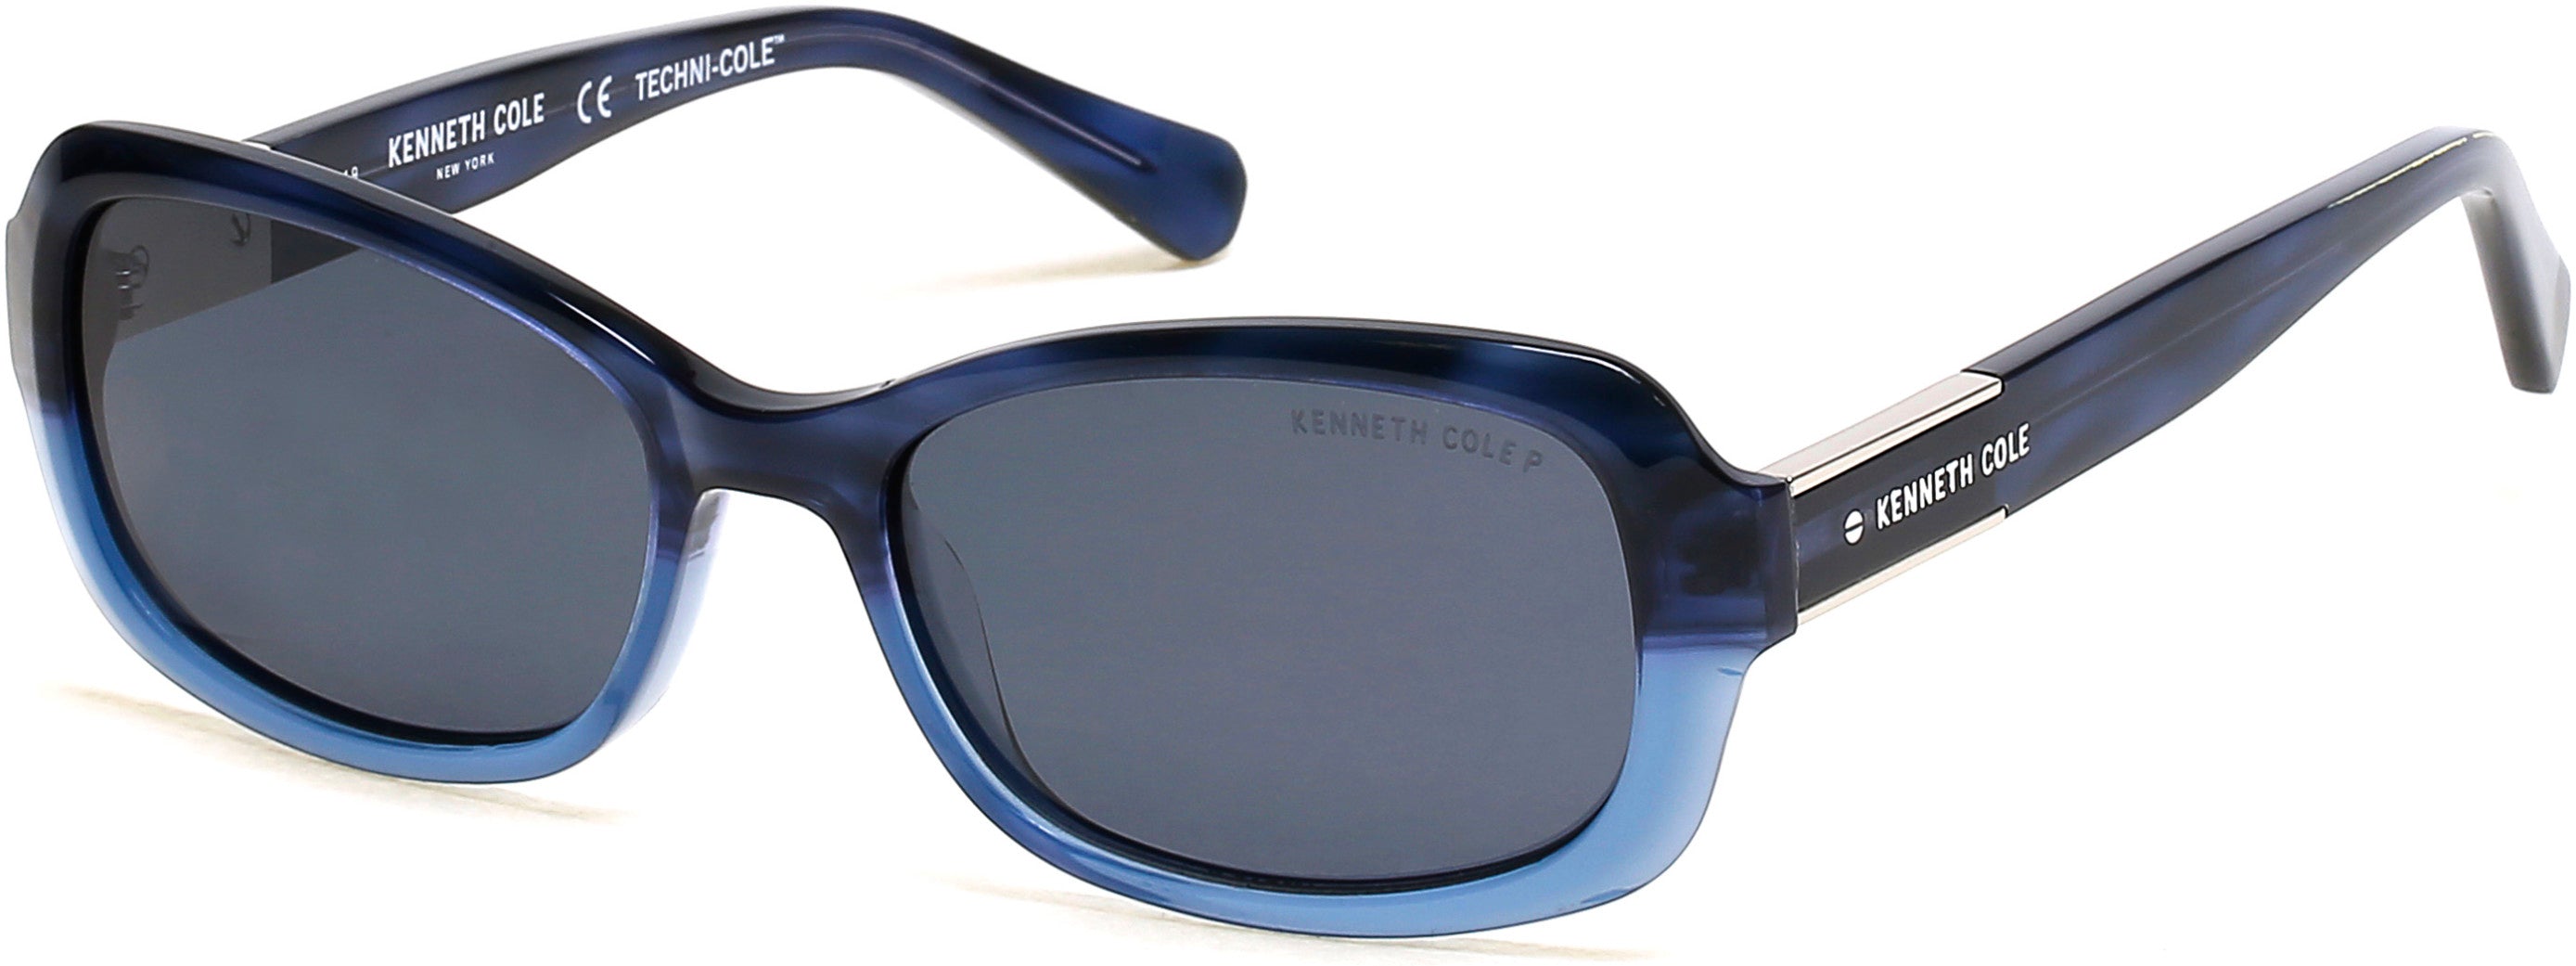 Kenneth Cole New York,Kenneth Cole Reaction KC7241 Oval Sunglasses 90D-90D - Shiny Blue / Smoke Polarized